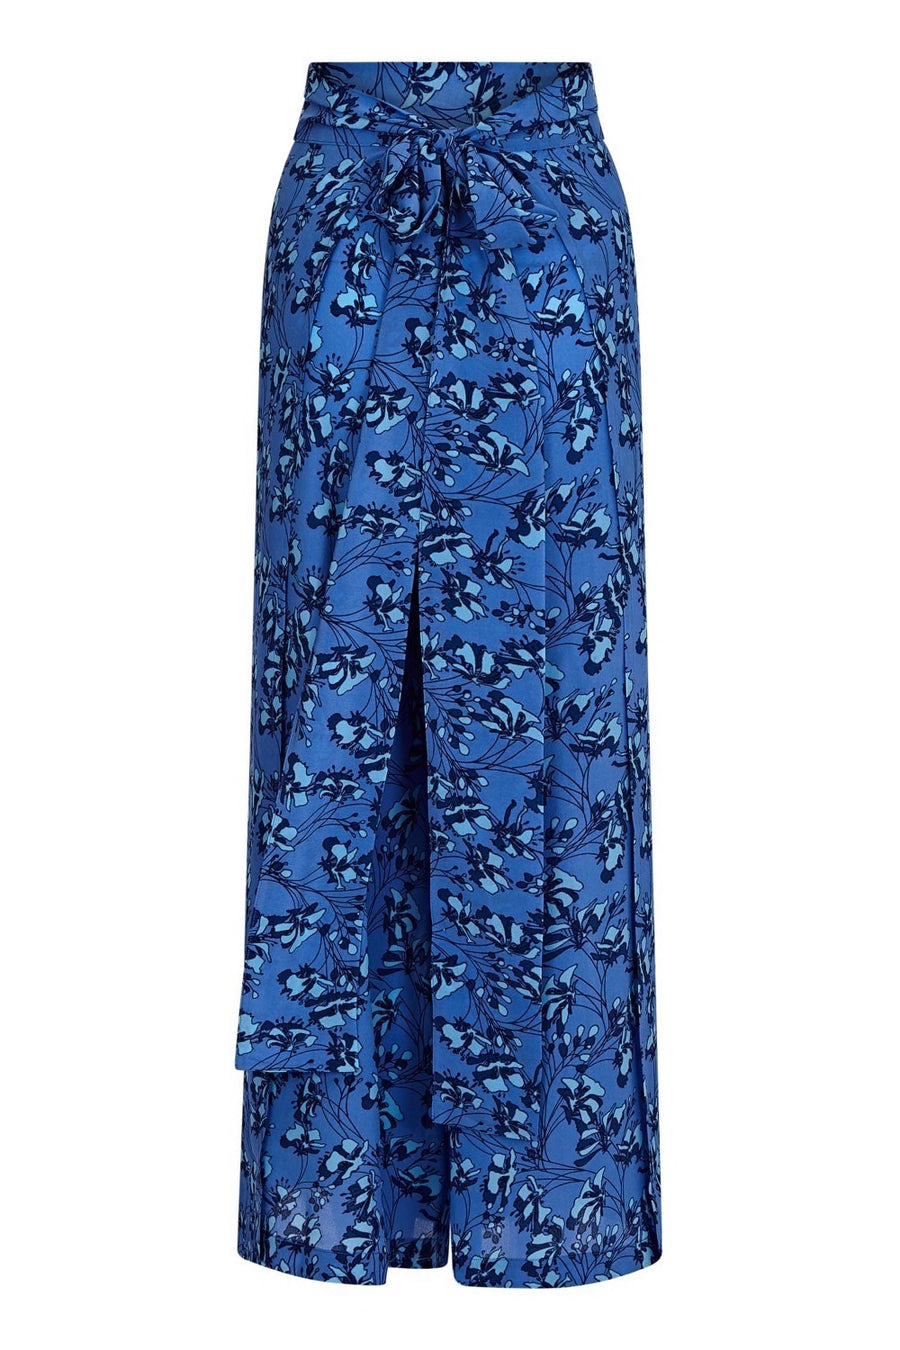 Silk Gabija Palazzo Pants: FLAMBOYANT FLOWER - BLUE designer Lotty B Mustique easy elegant style